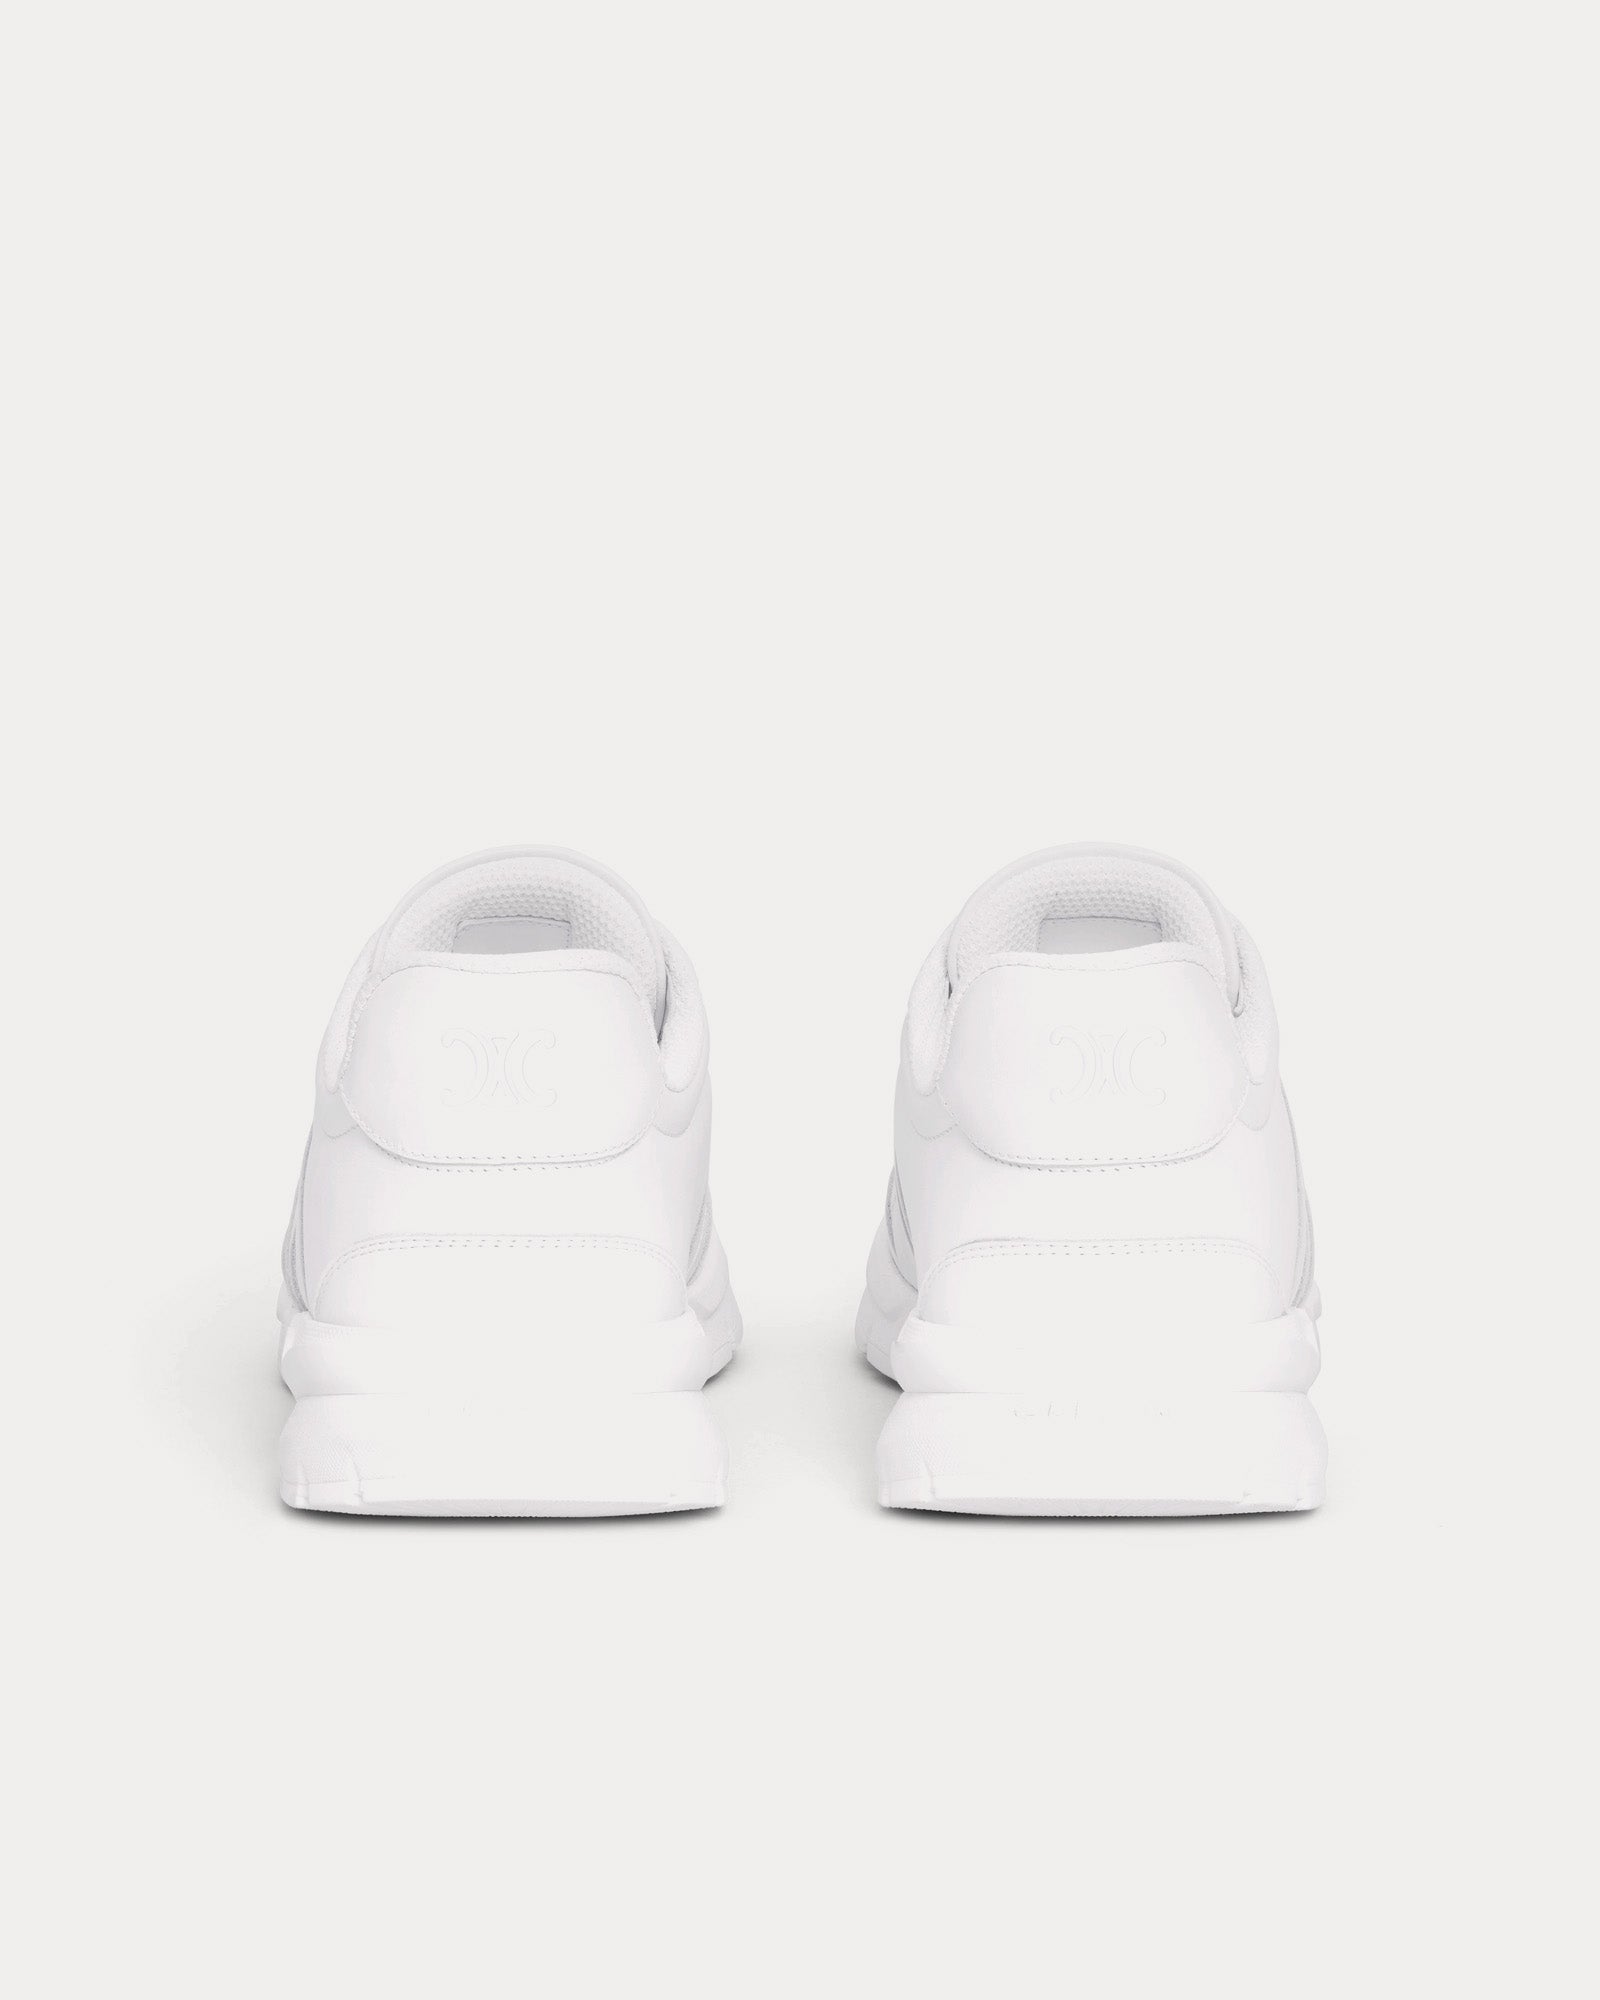 Celine - CR-01 Runner Optic White Low Top Sneakers